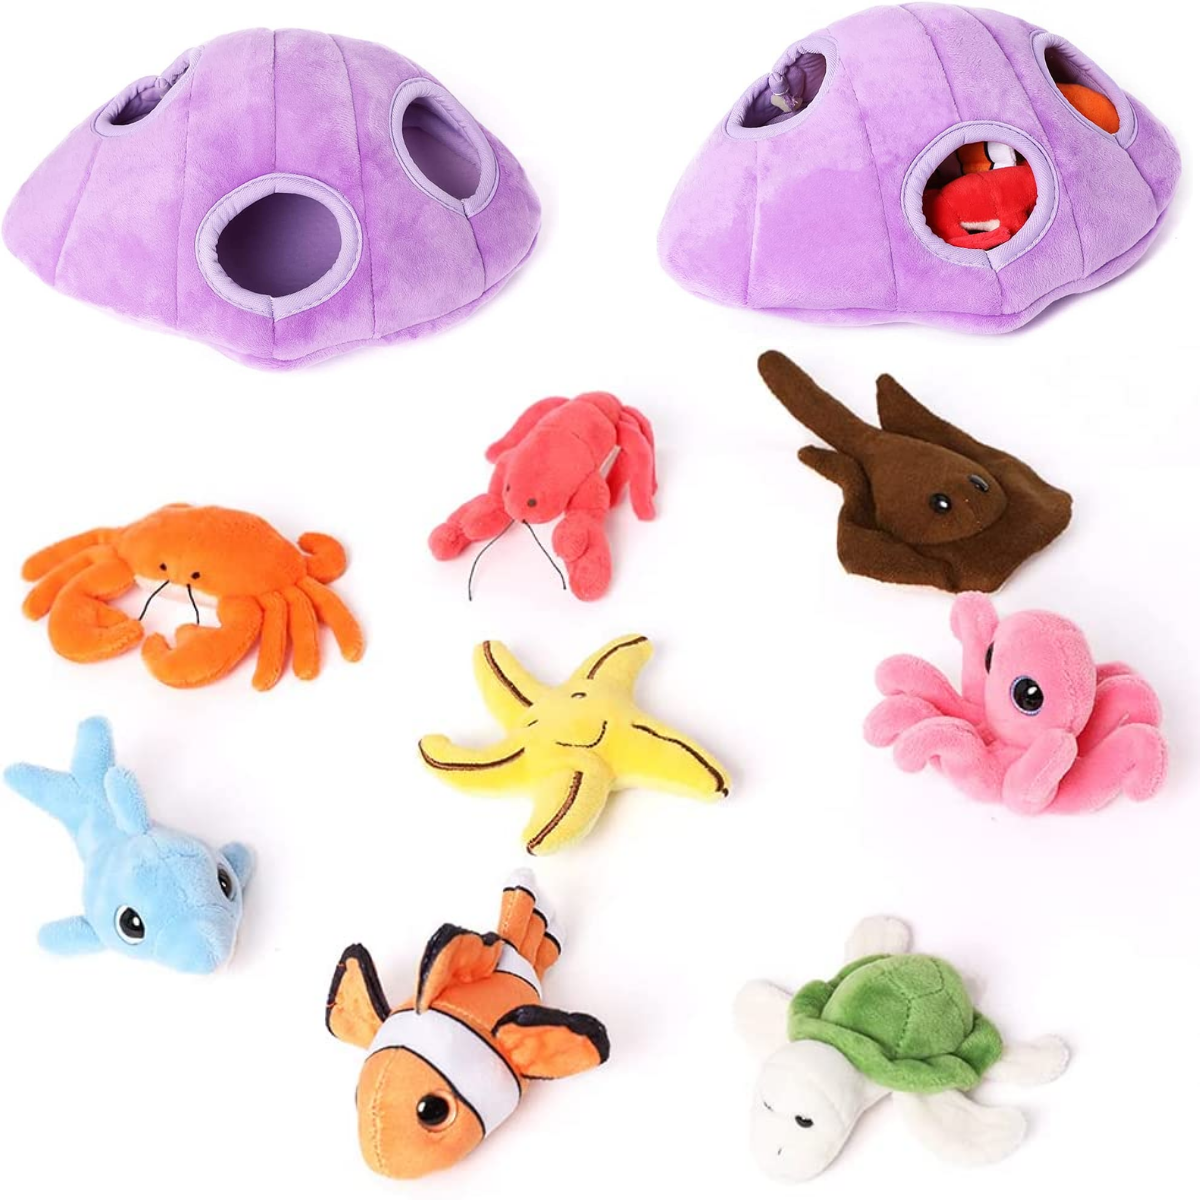 8 Piece Sea Animal Stuffed Toy Set, 10” - MorisMos Stuffed Animals